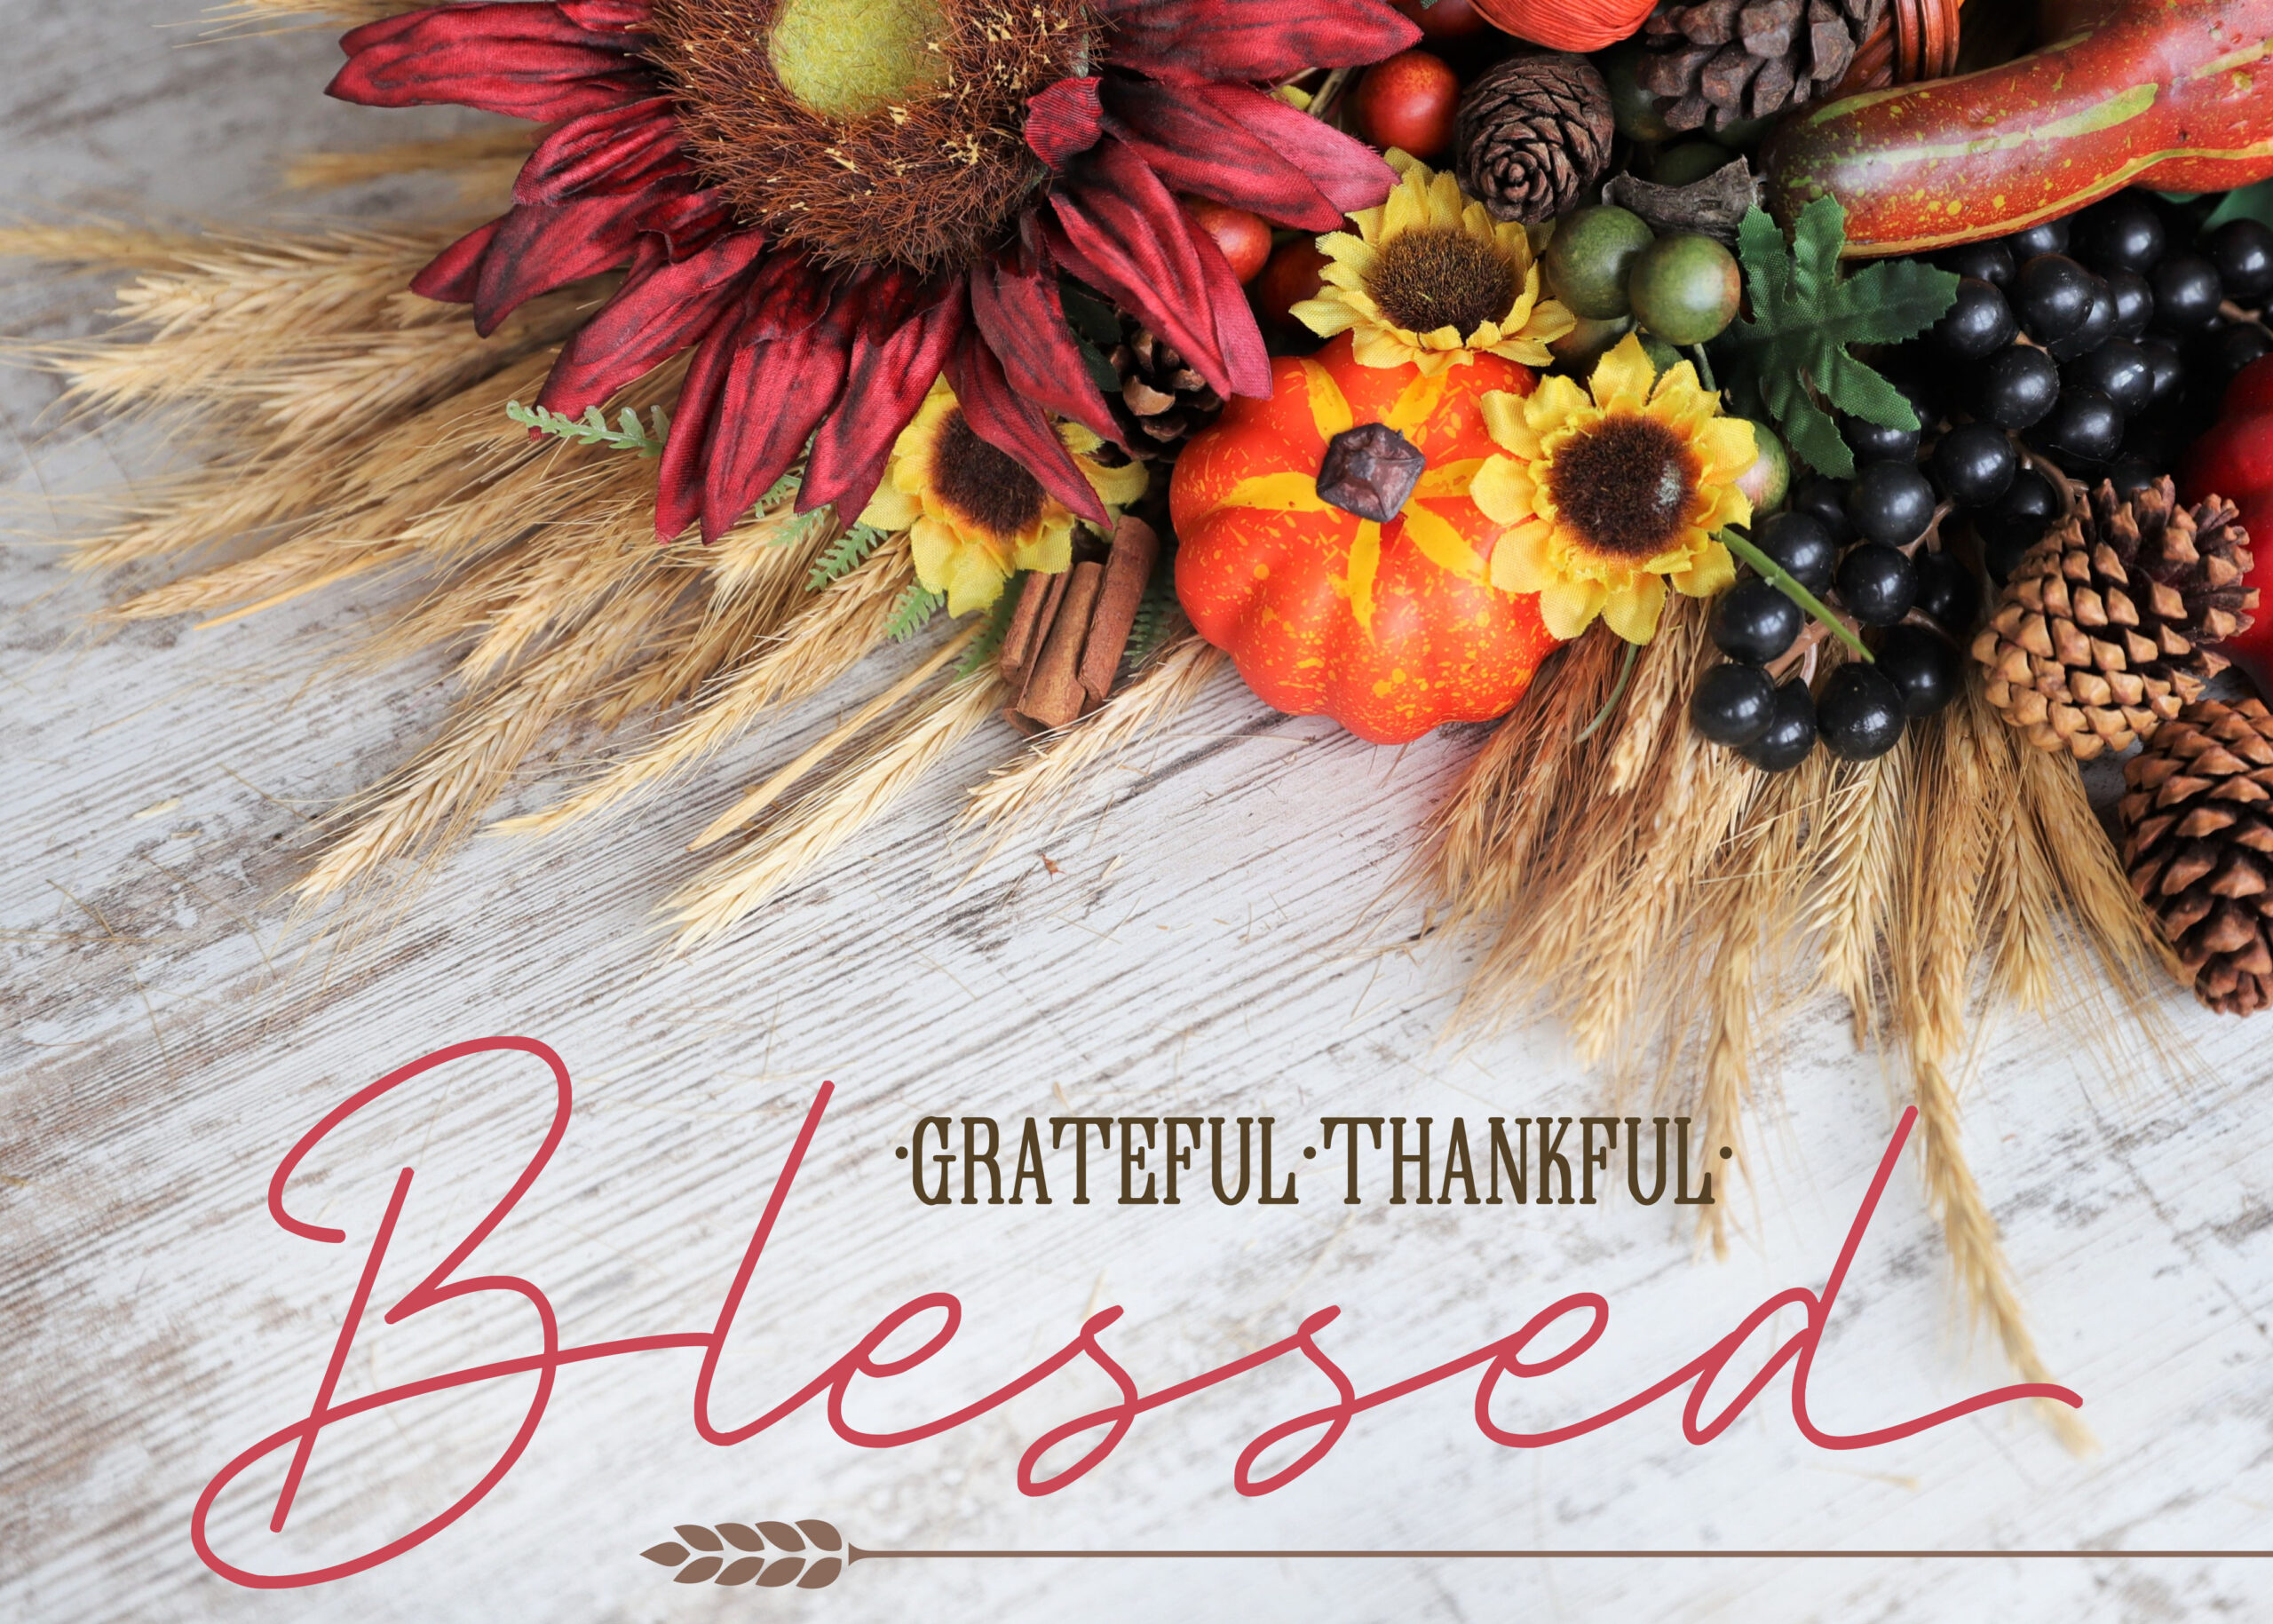 Thanksgiving Eve – Nov. 23